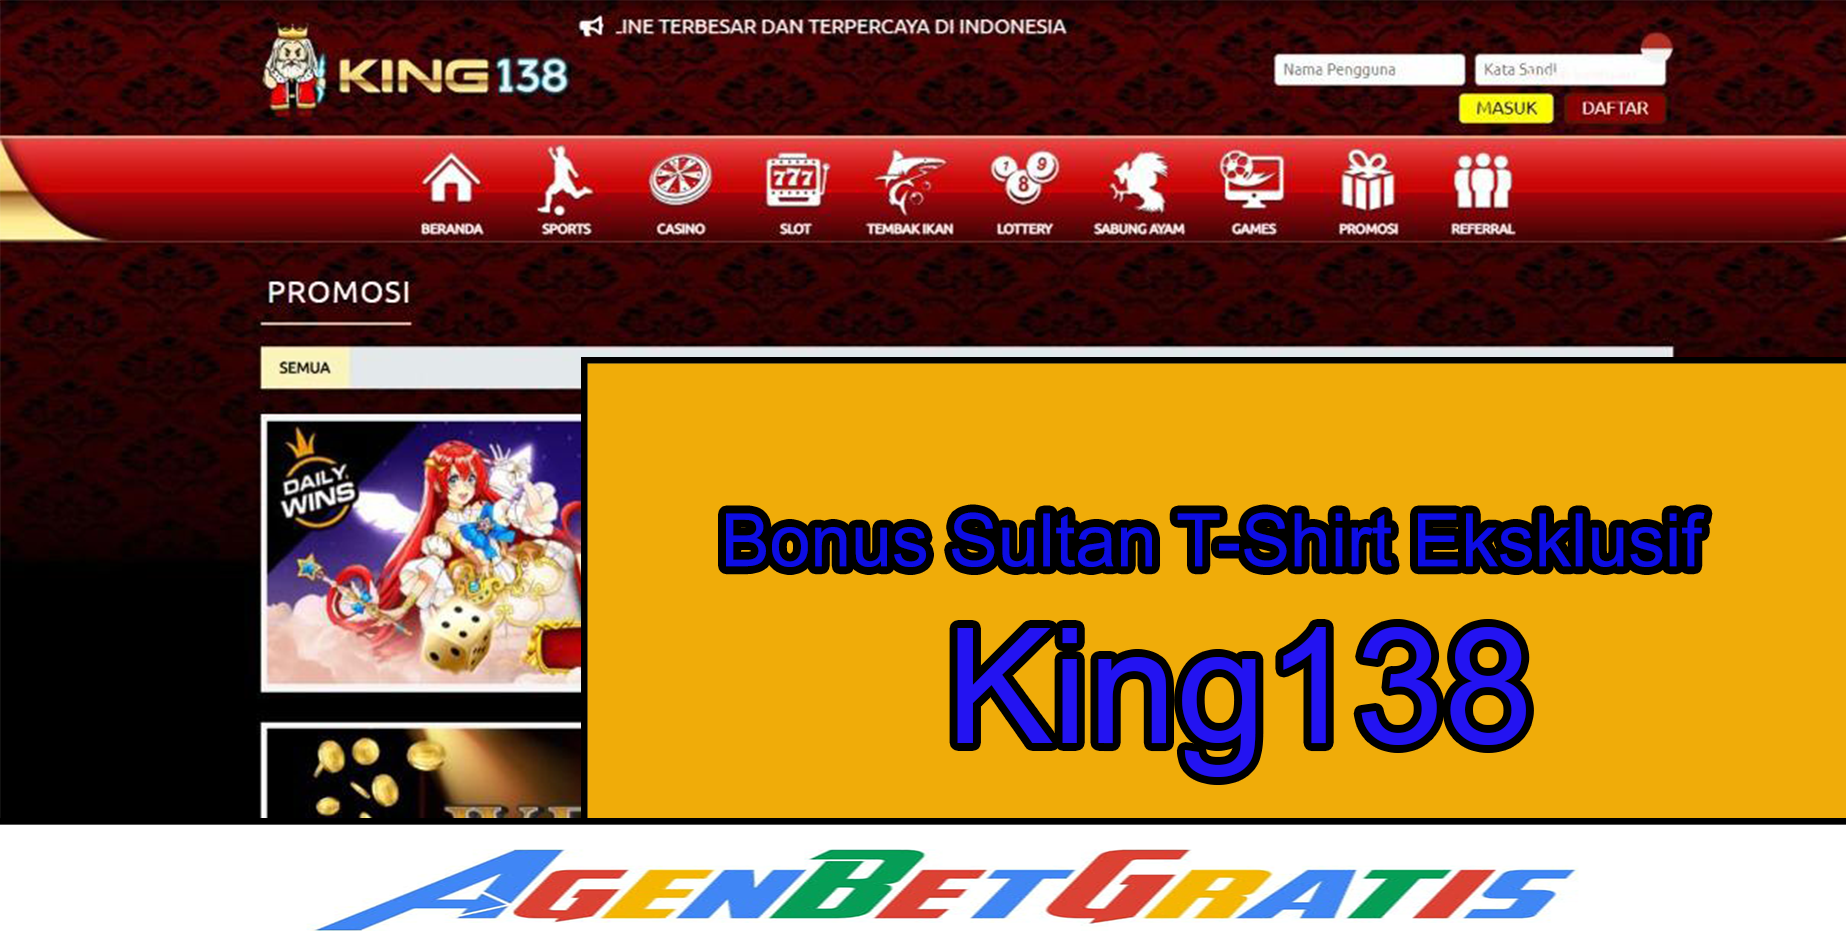 KING138 - Bonus Sultan T - Shirt Eksklusif